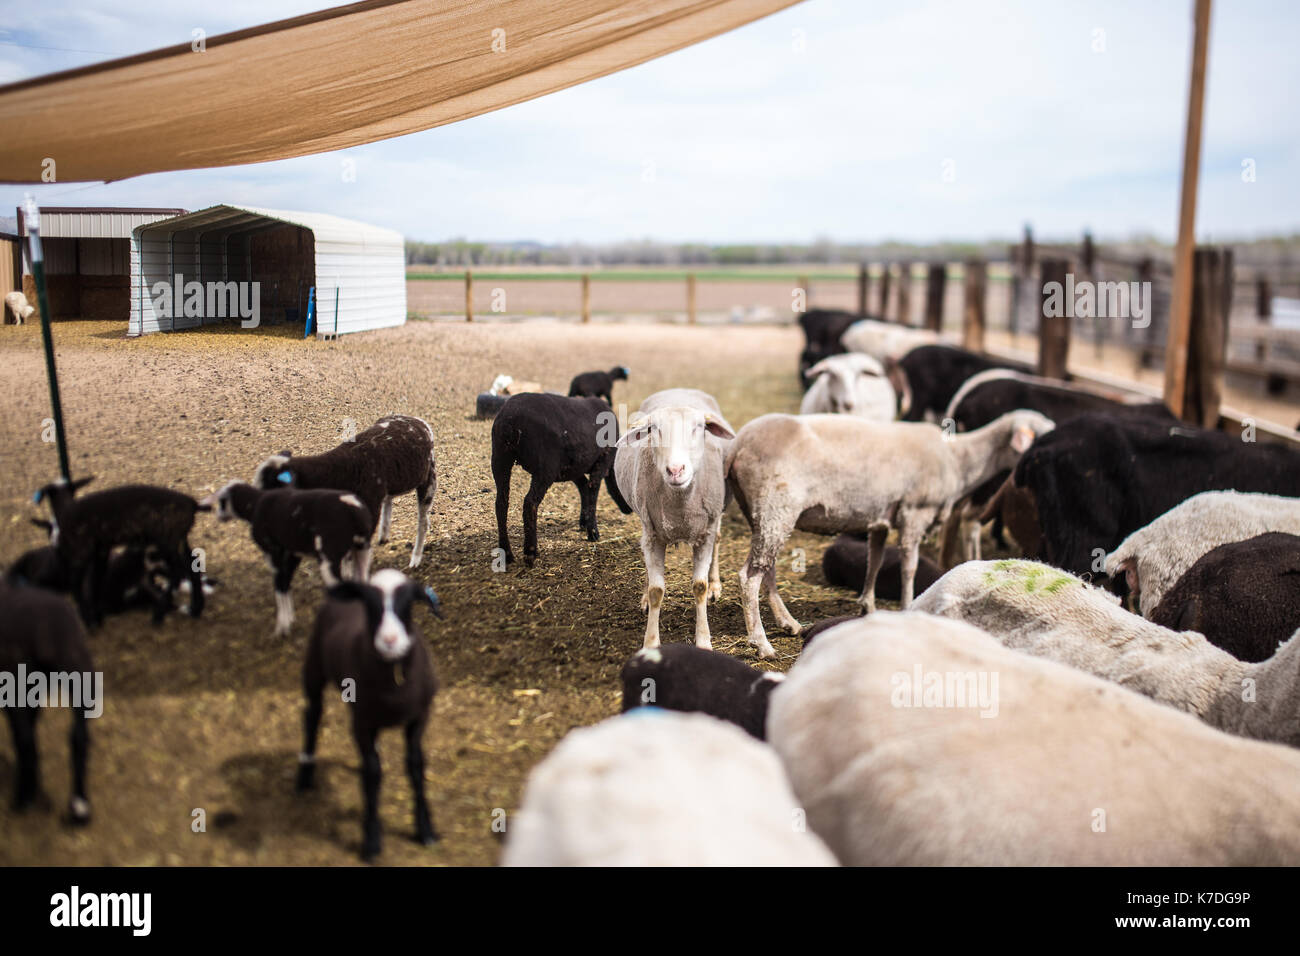 Sheep in pen at farm Stock Photo